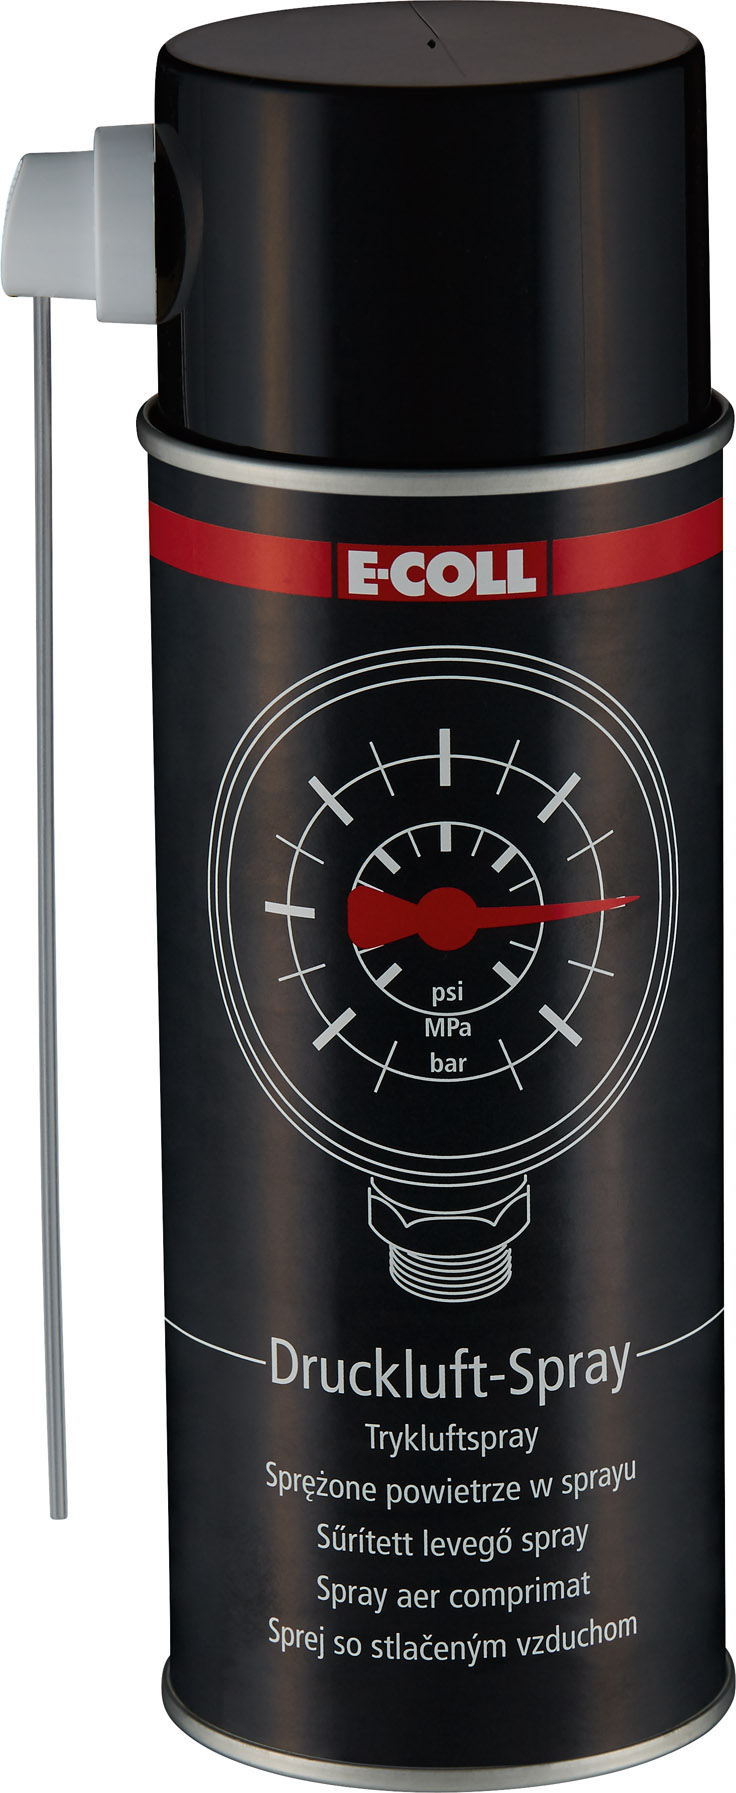 E-COLL Druckluftspray 400ml EE